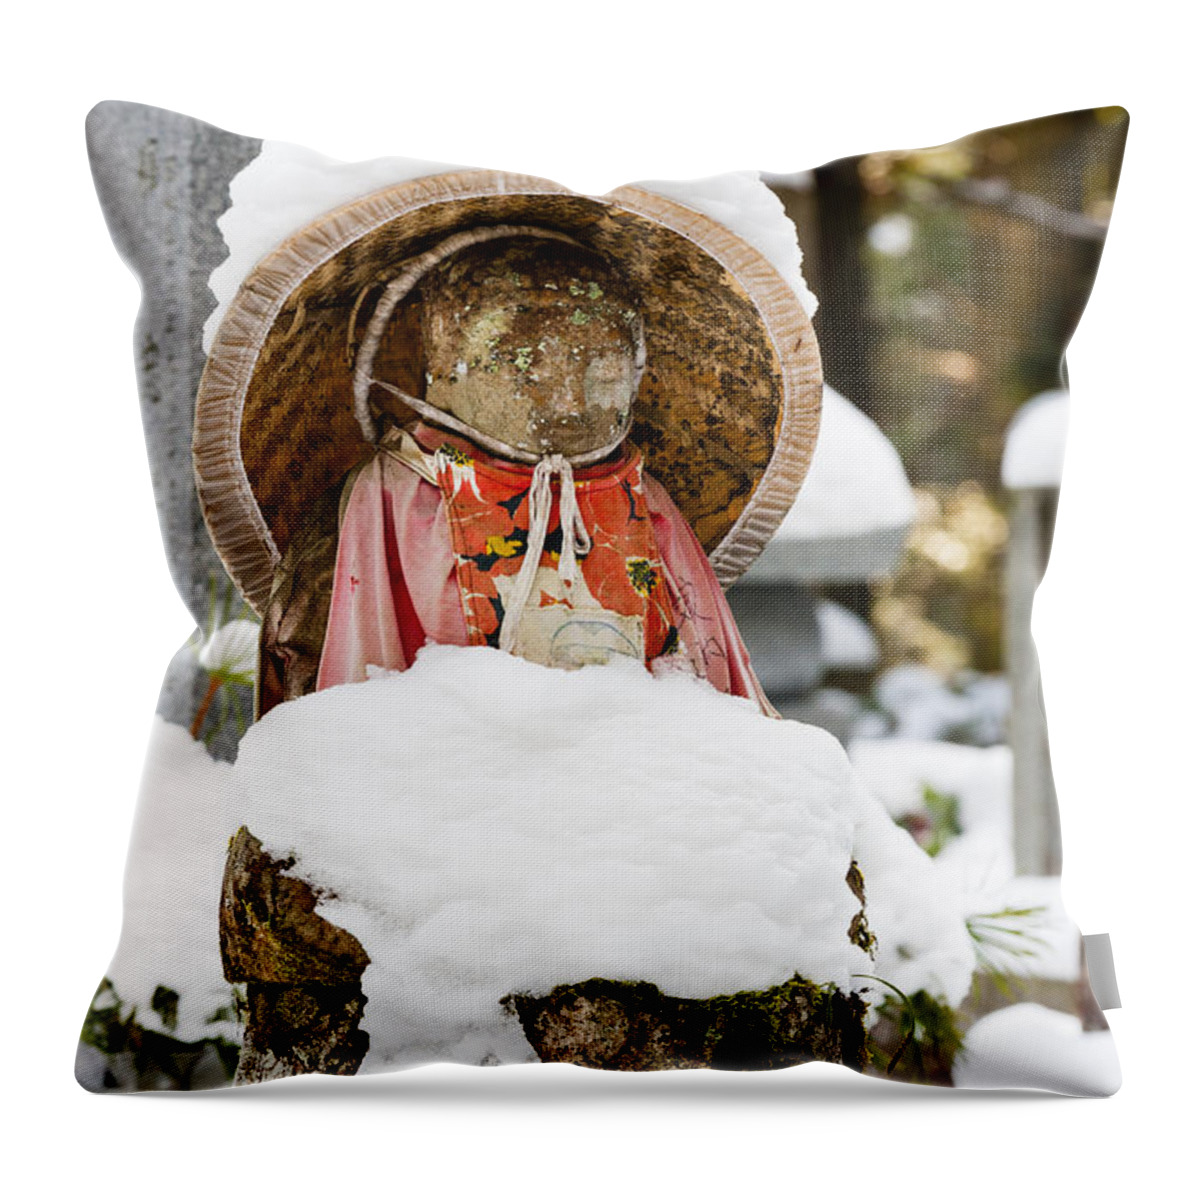 Koyasan Throw Pillow featuring the photograph Red bibbed Jizo statue in the snow at Koyasan by Malcolm Fairman